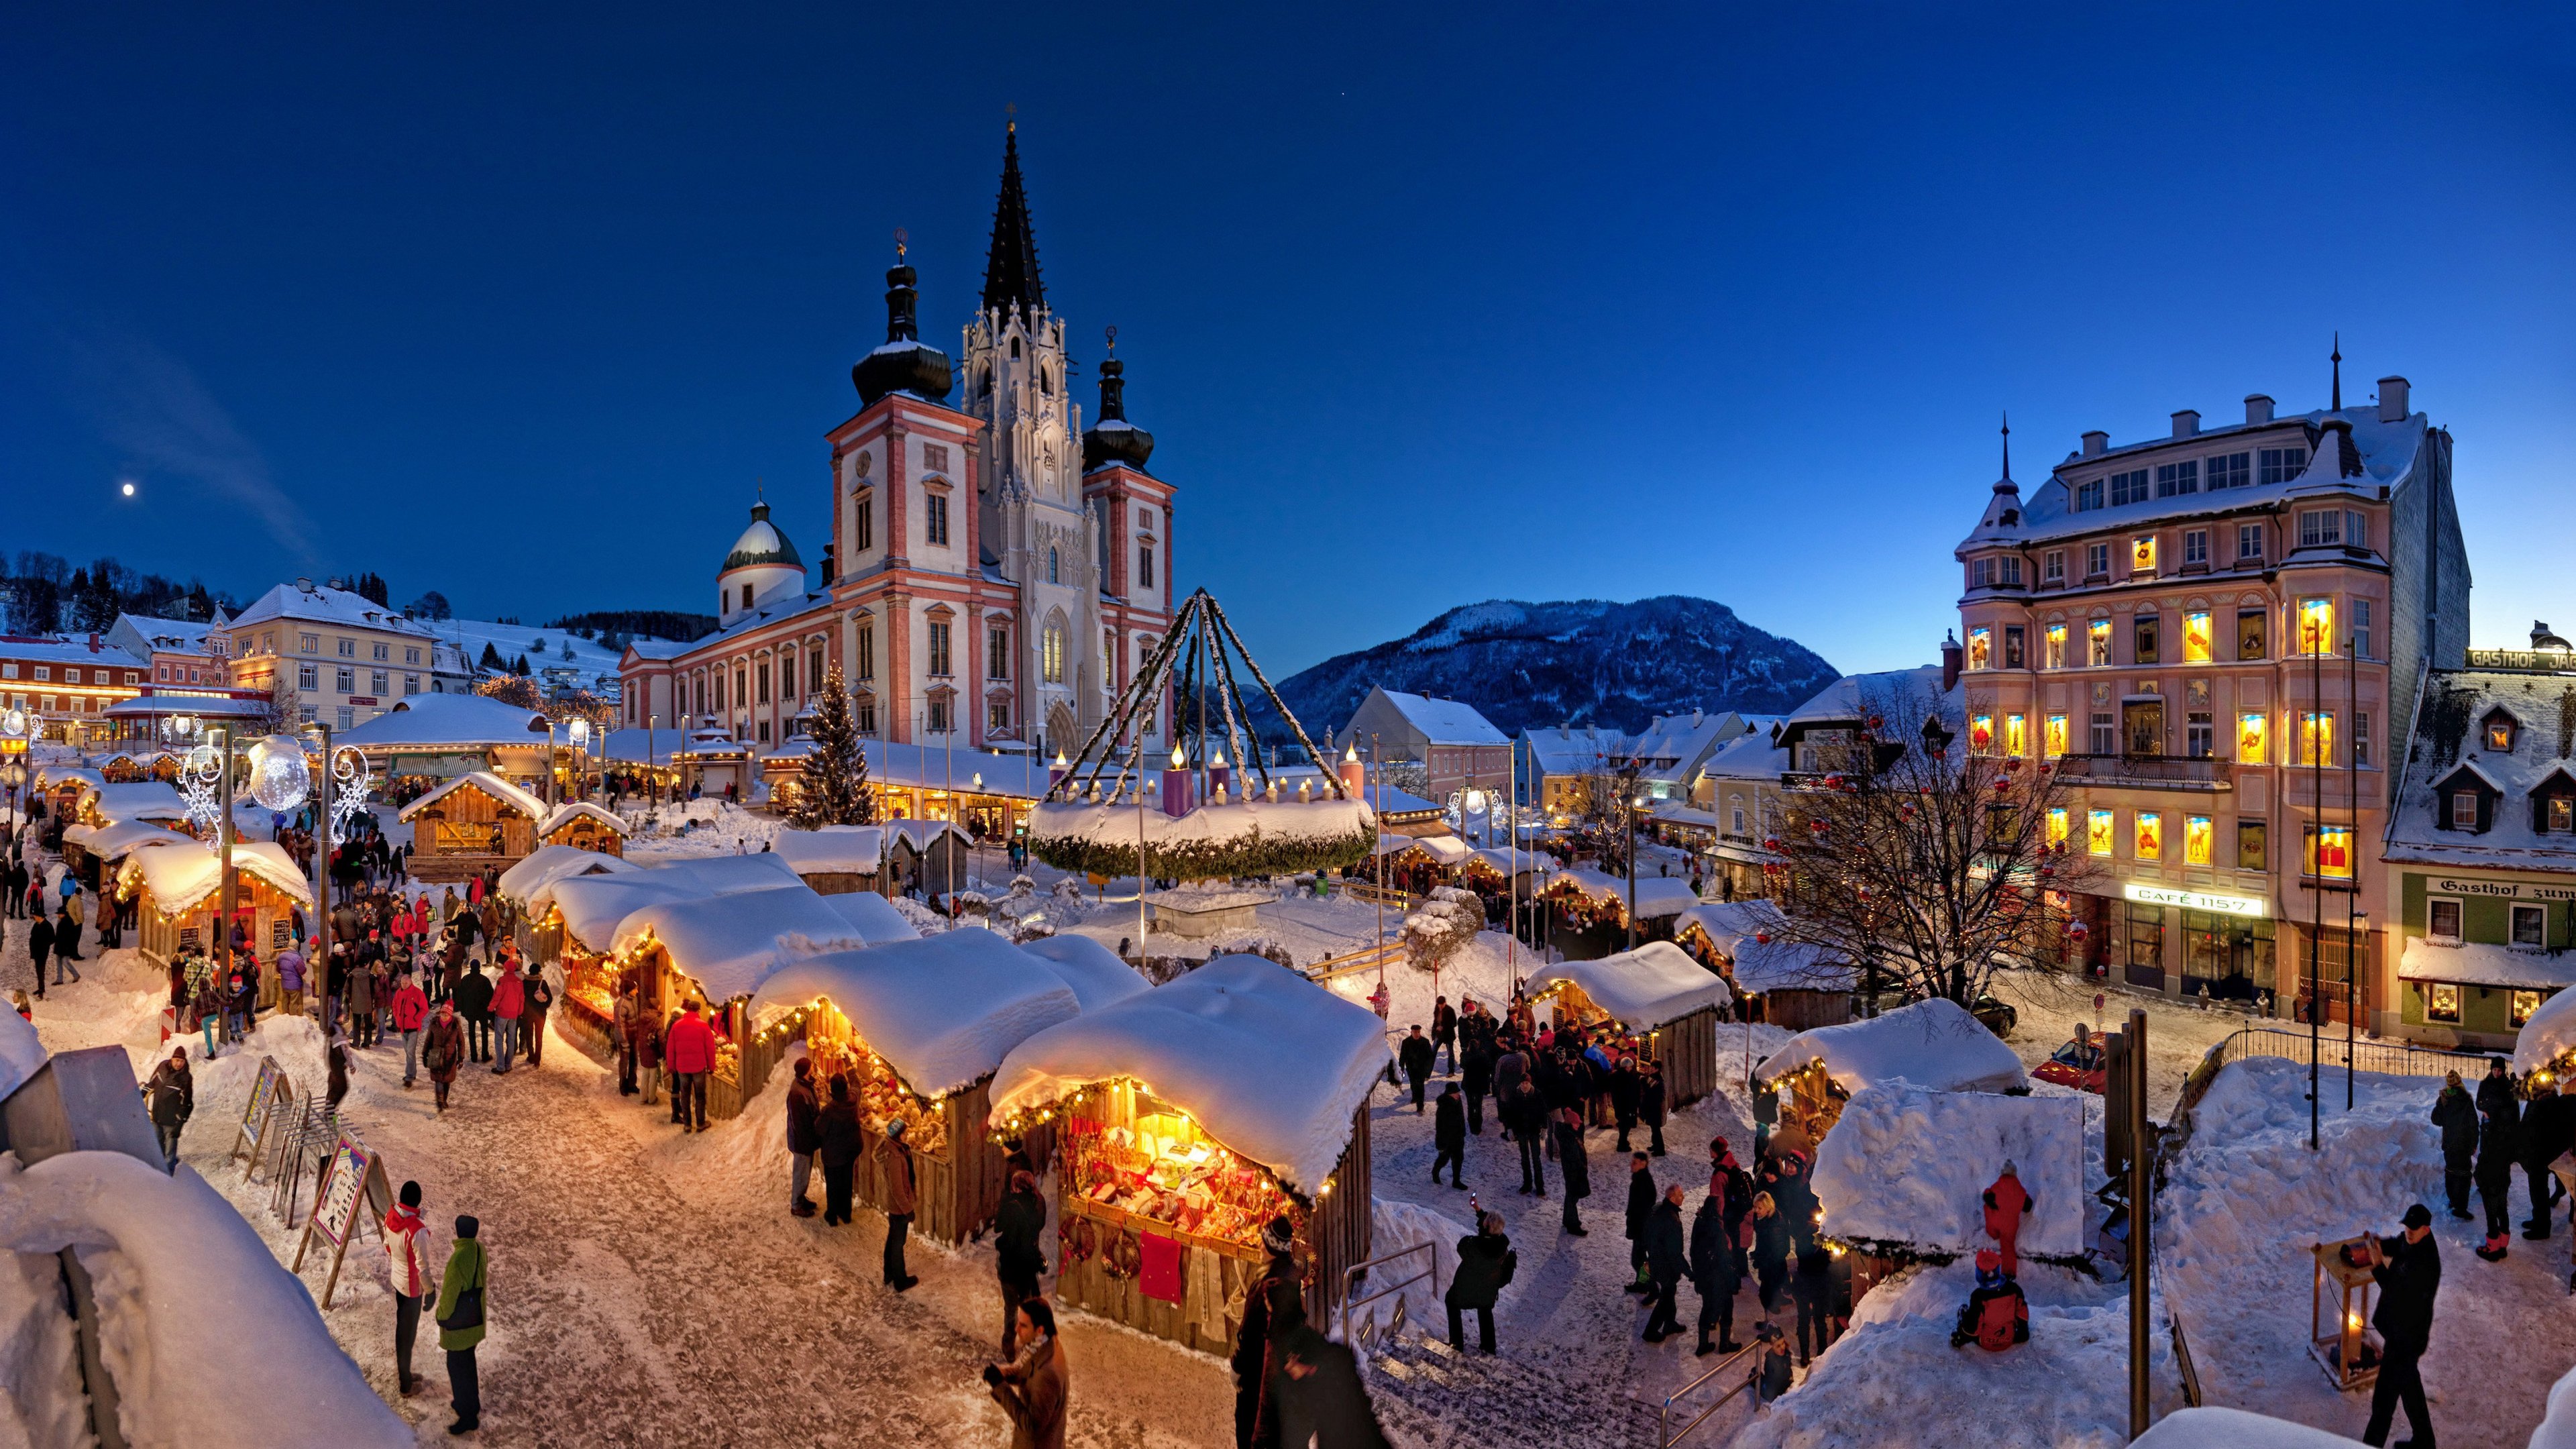 christmas, decoration, light, holiday, people, night, building, city, market, snow, square